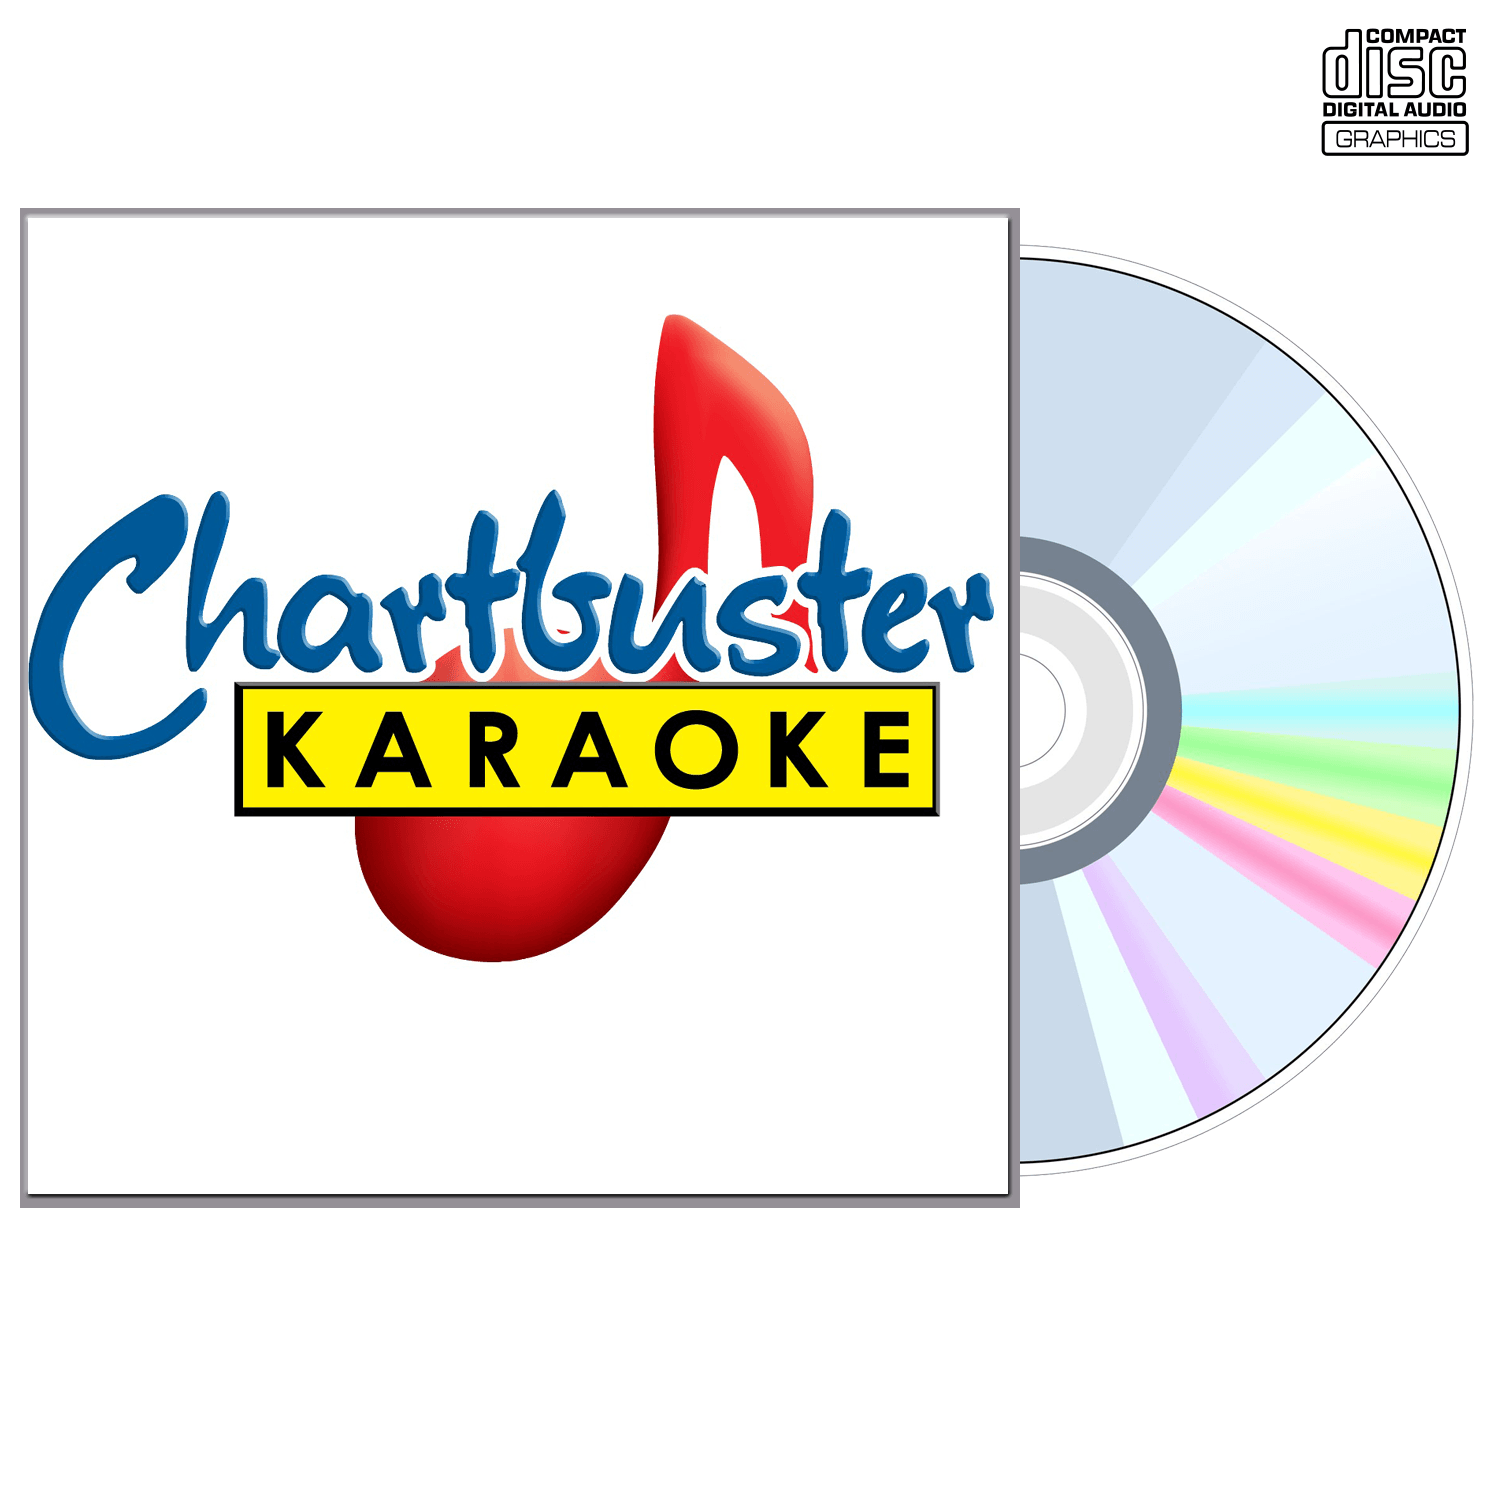 Toby Keith Vol 3 - CD+G - Chartbuster Karaoke - Karaoke Home Entertainment